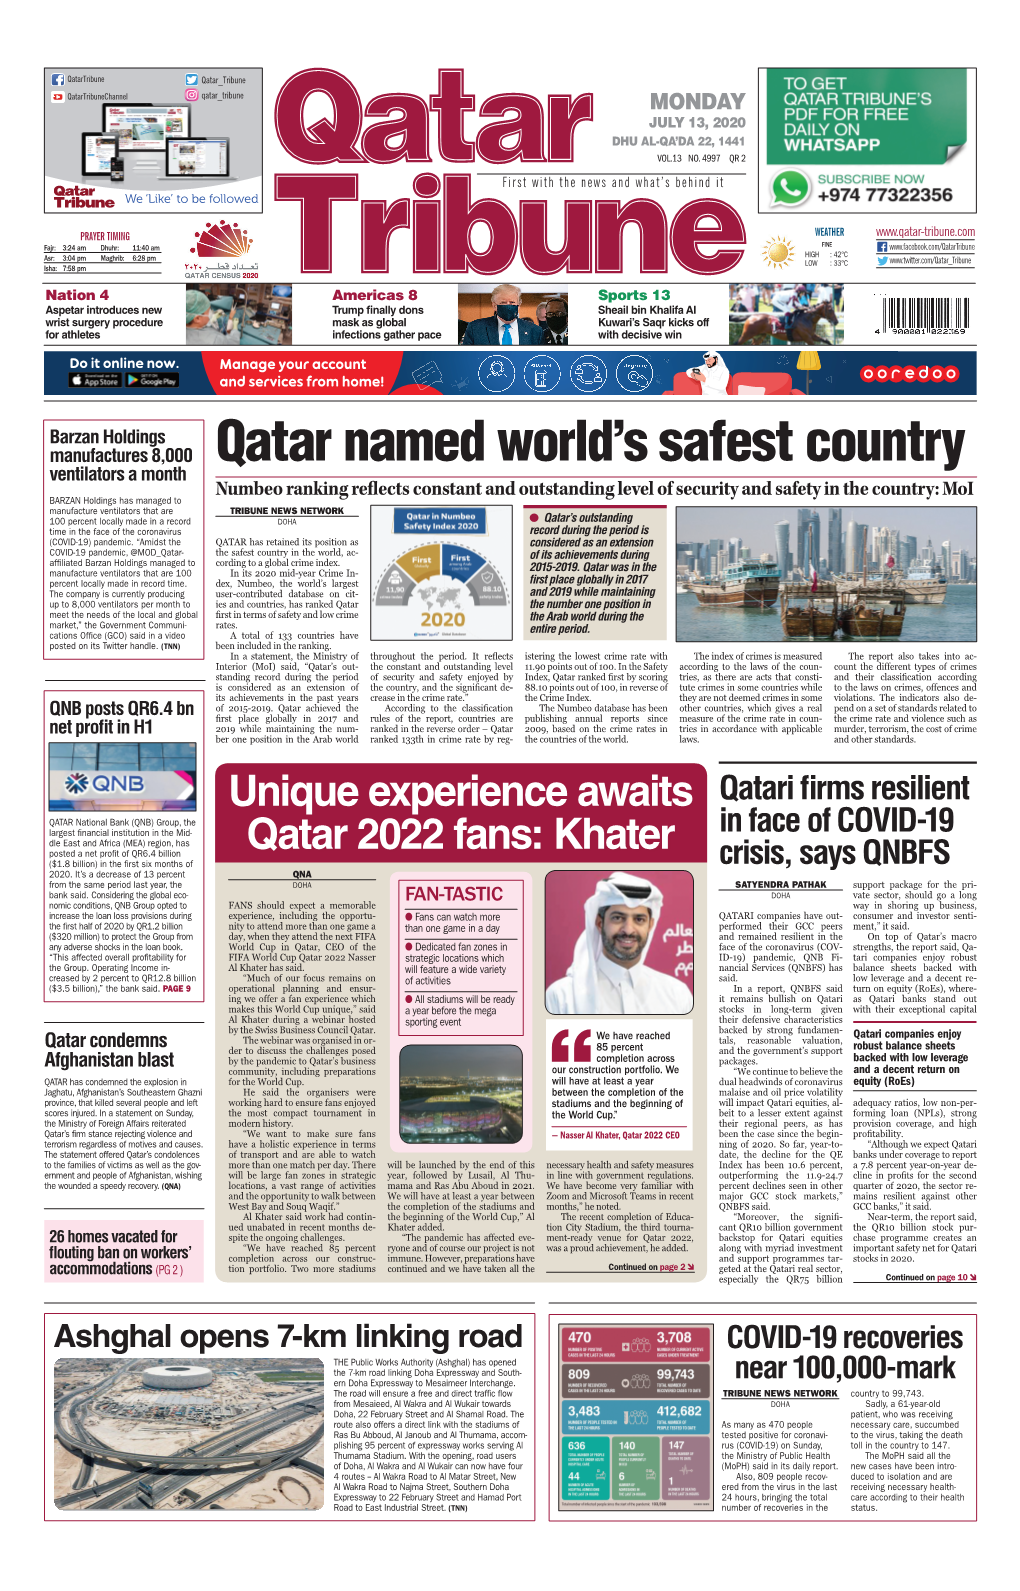 Qatar Named World's Safest Country